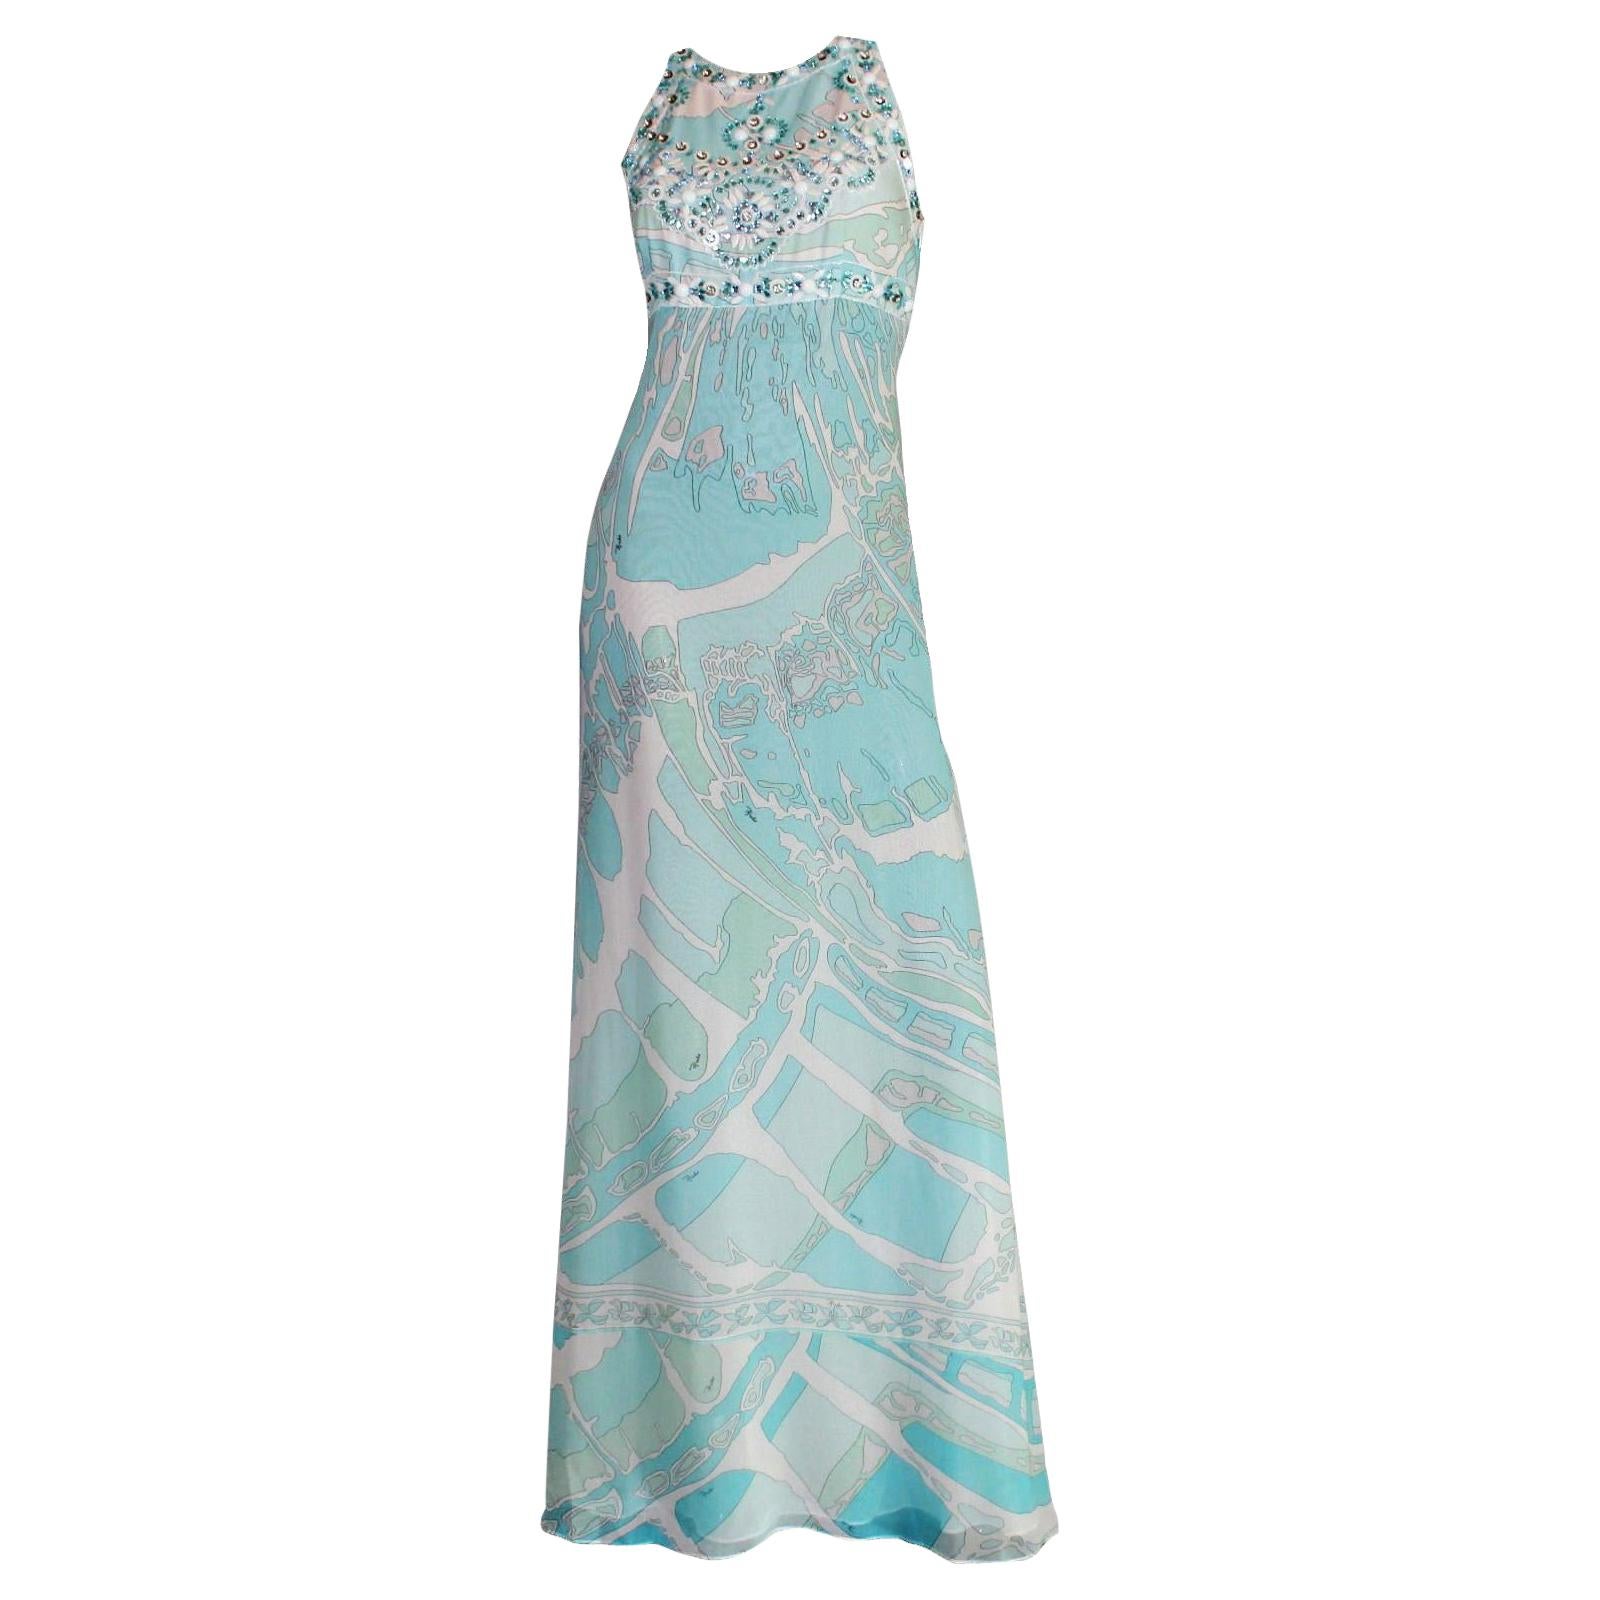 Emilio Pucci Seafoam Embroidered Crystal Sequin Silk Chiffon Gown Dress